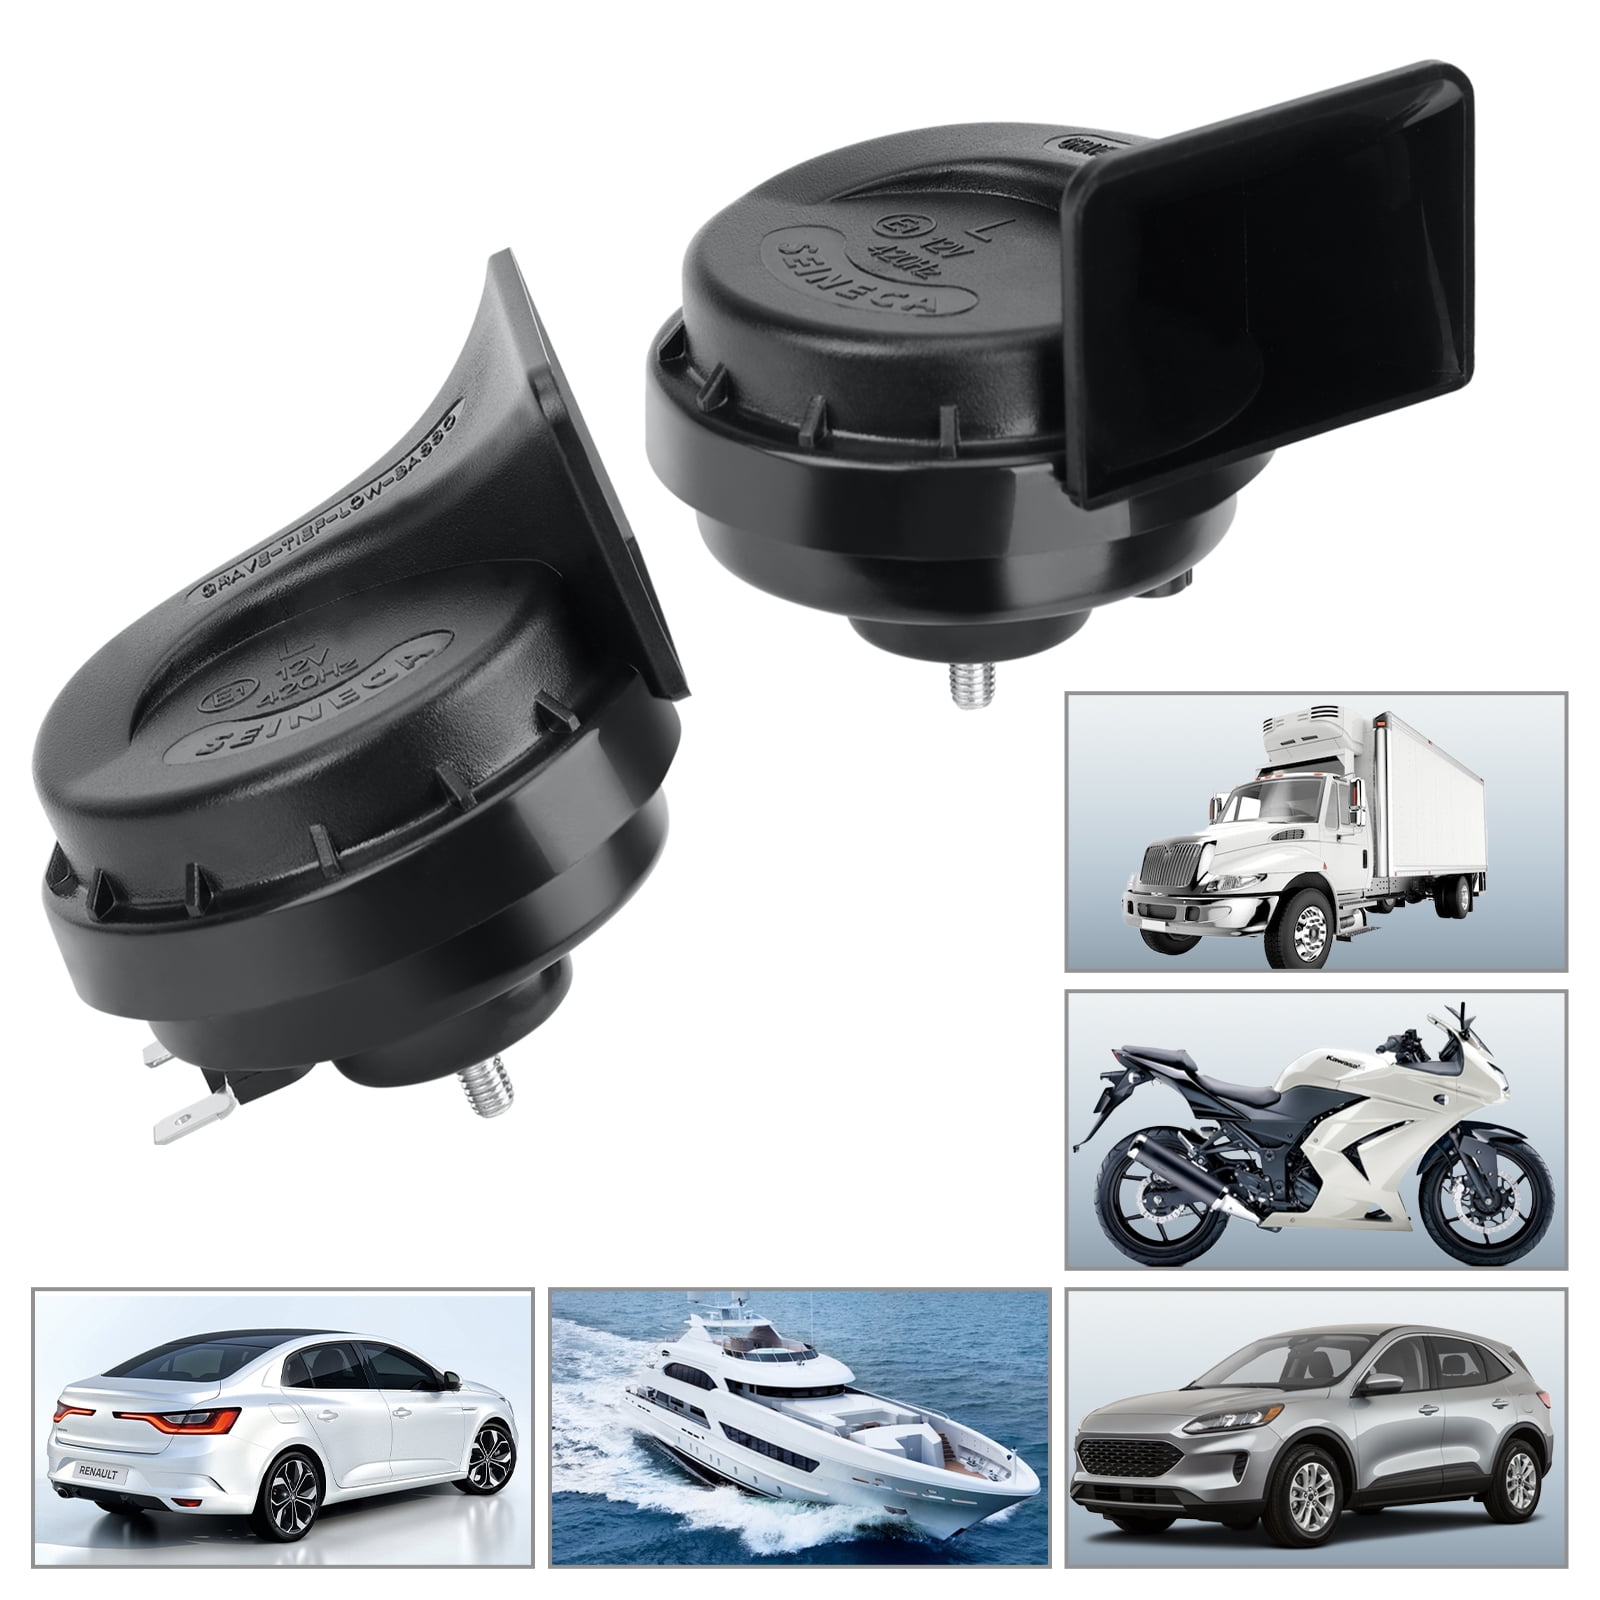 SEINECA Snail Car Horn Waterproof 12V Loud Dual-Tone Electric Horn Kit  Universal Fit for Car Motorcycle Pickup RV SUV MPV Van.